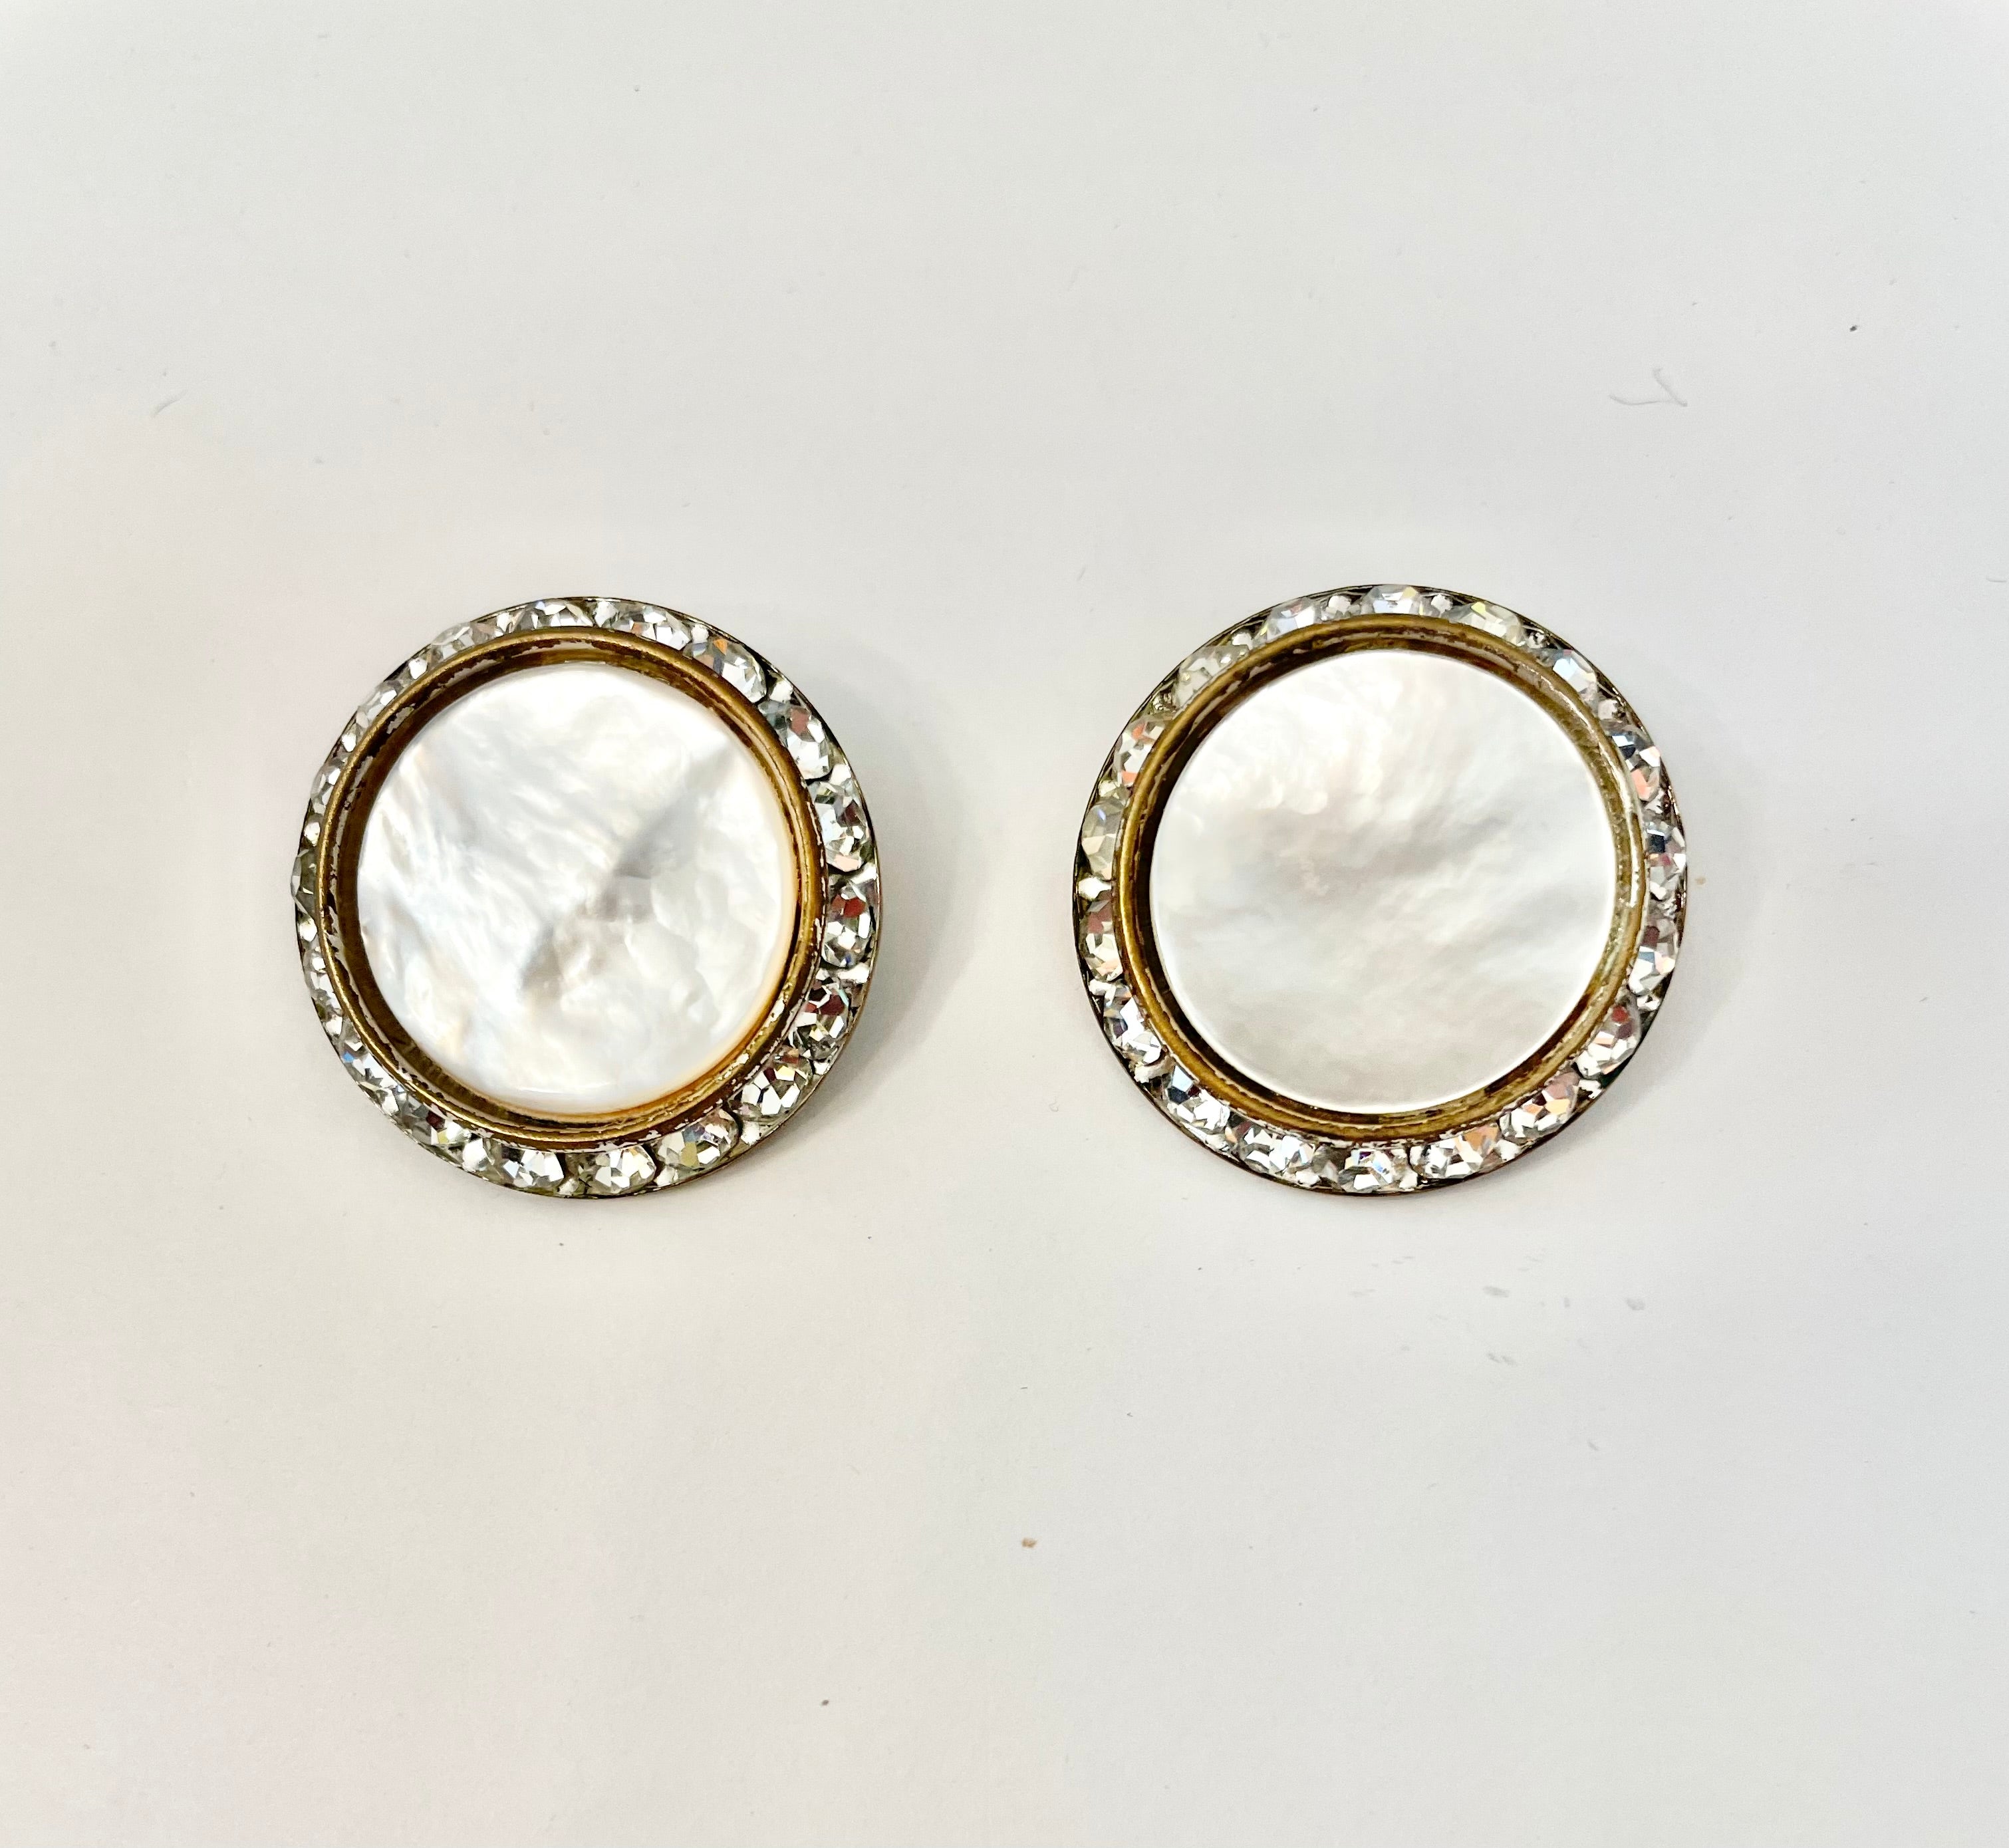 1960's Lisner super classy mother of pearl button earrings... so elegant.